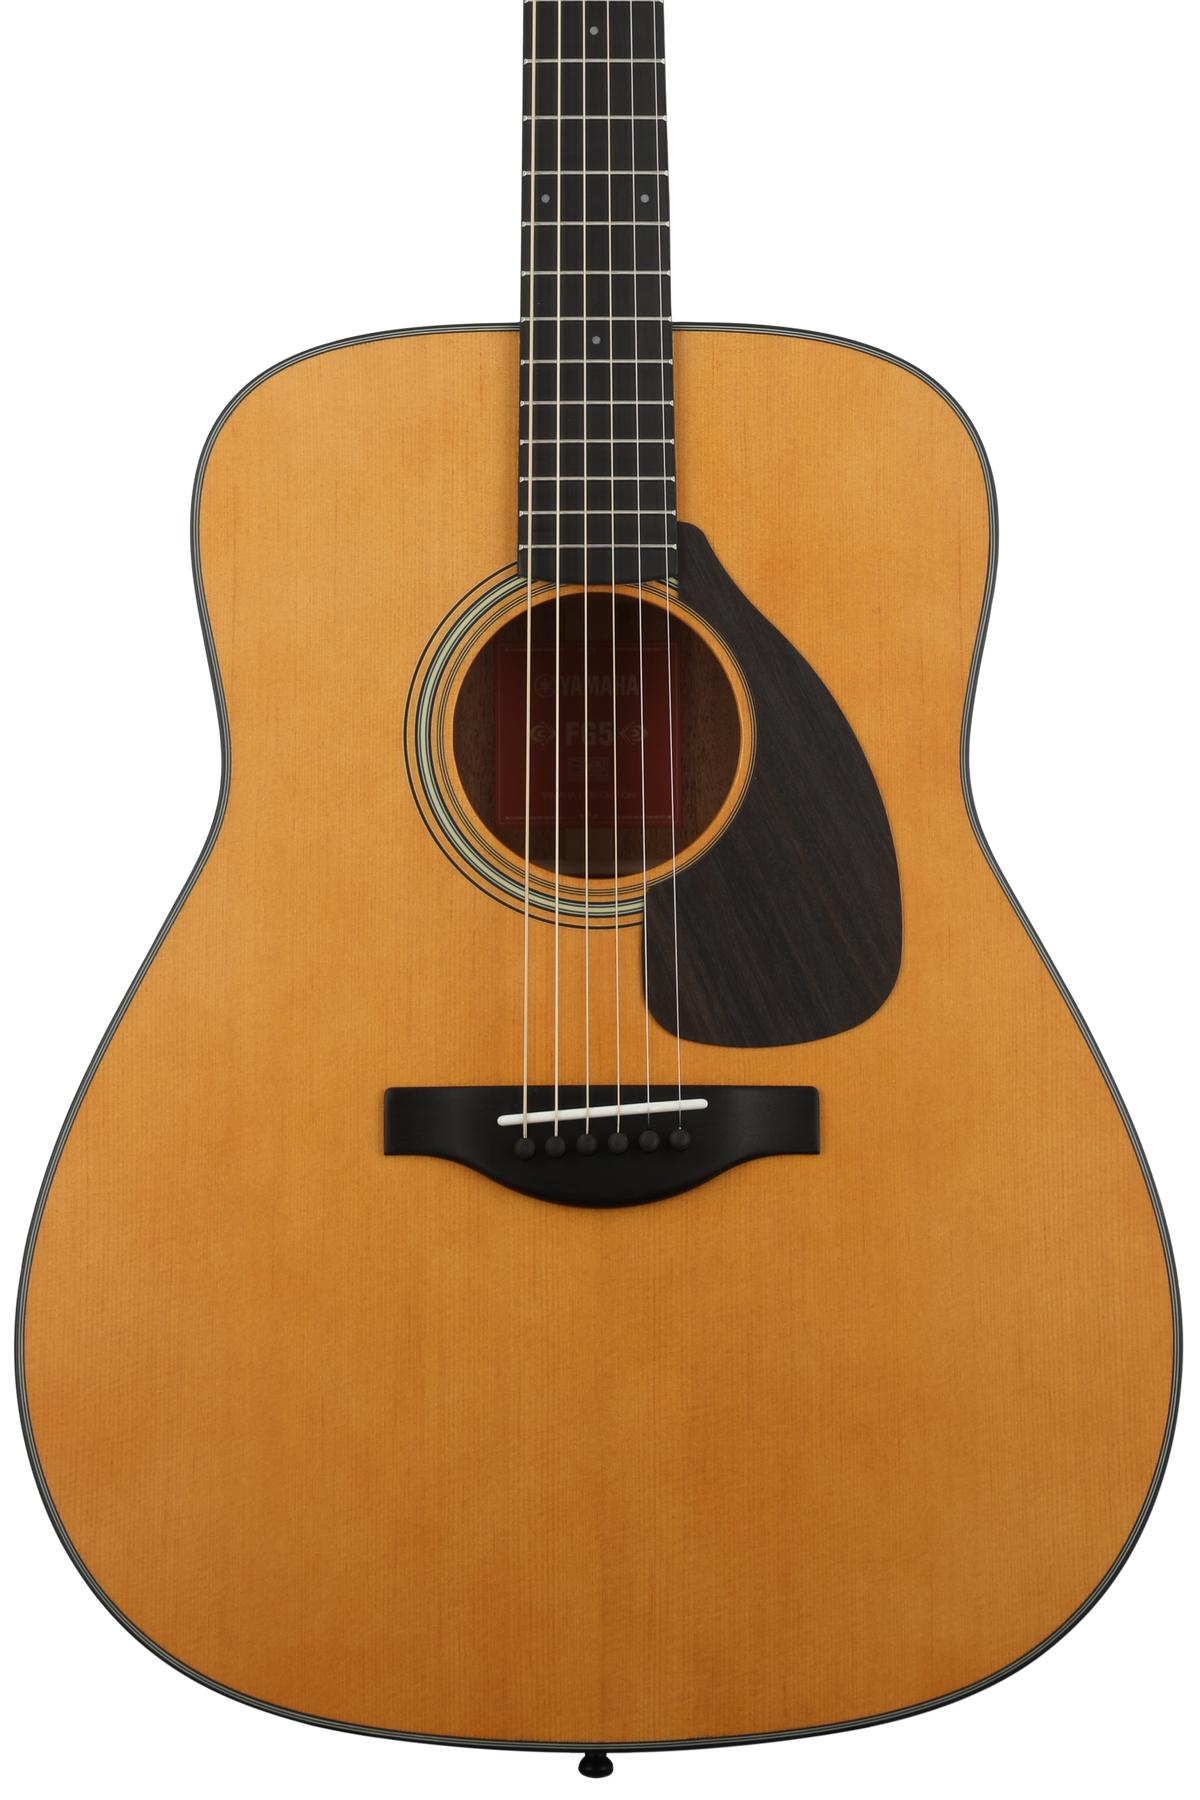 Yamaha Red Label FG5 Acoustic Guitar - Natural